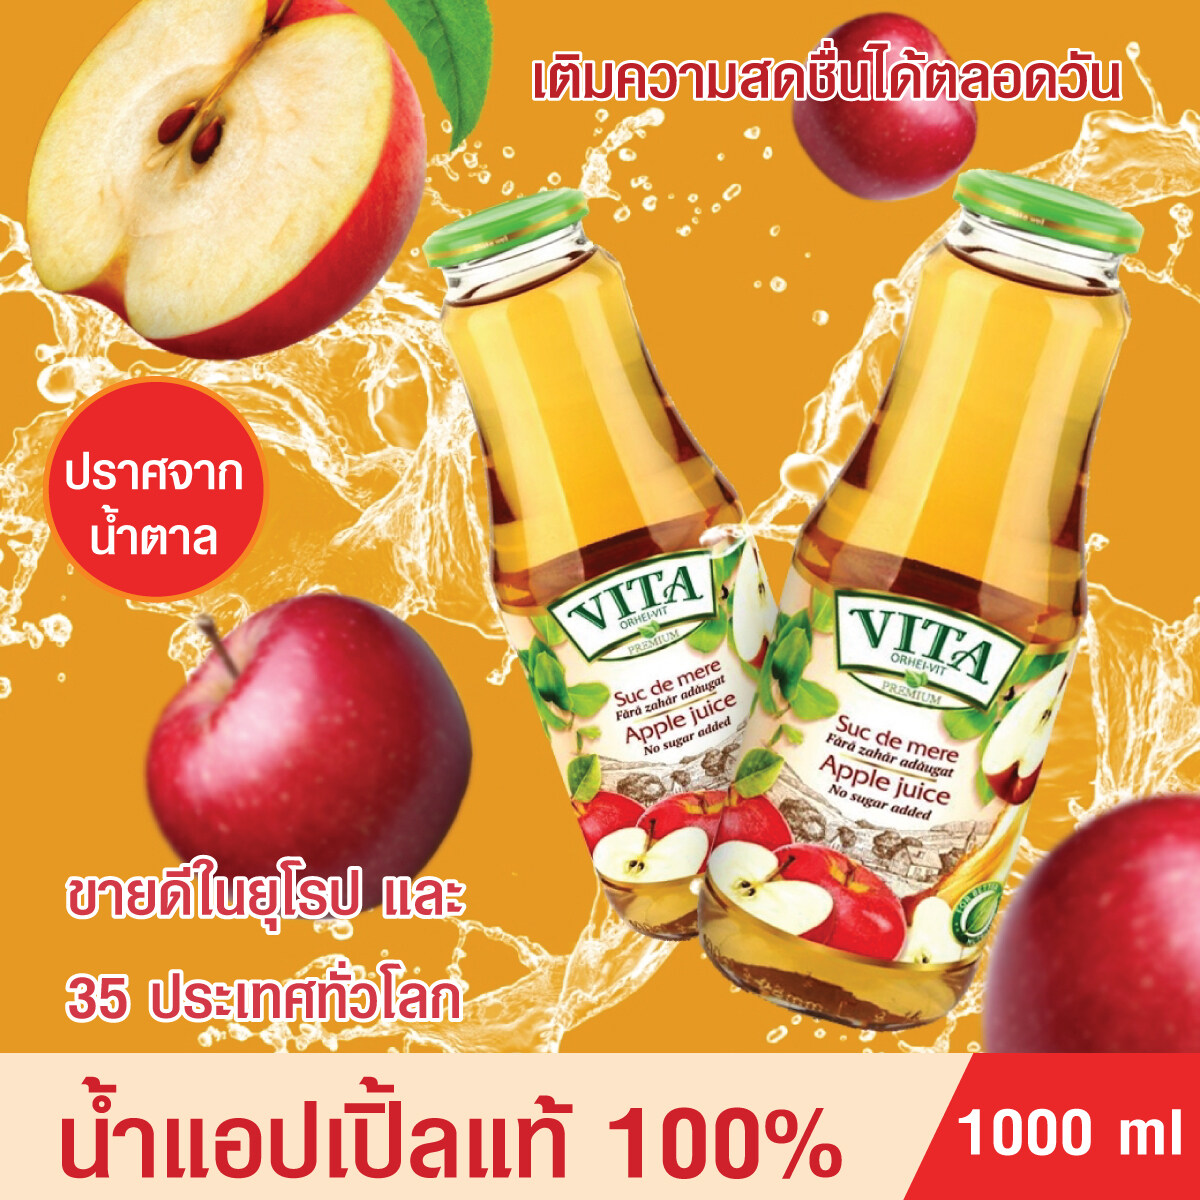 VITA ORHEI-VIT Apple Juice No sugar added 1000ml น้ำแอปเปิ้ลแท้ 100% ไม่ผสมน้ำตาล น้ำผลไม้ช่วยชลอวัย คุมน้ำหนัก ขายดีในยุโรปและ 35 ประเทศทั่วโลก Sodsaifarm